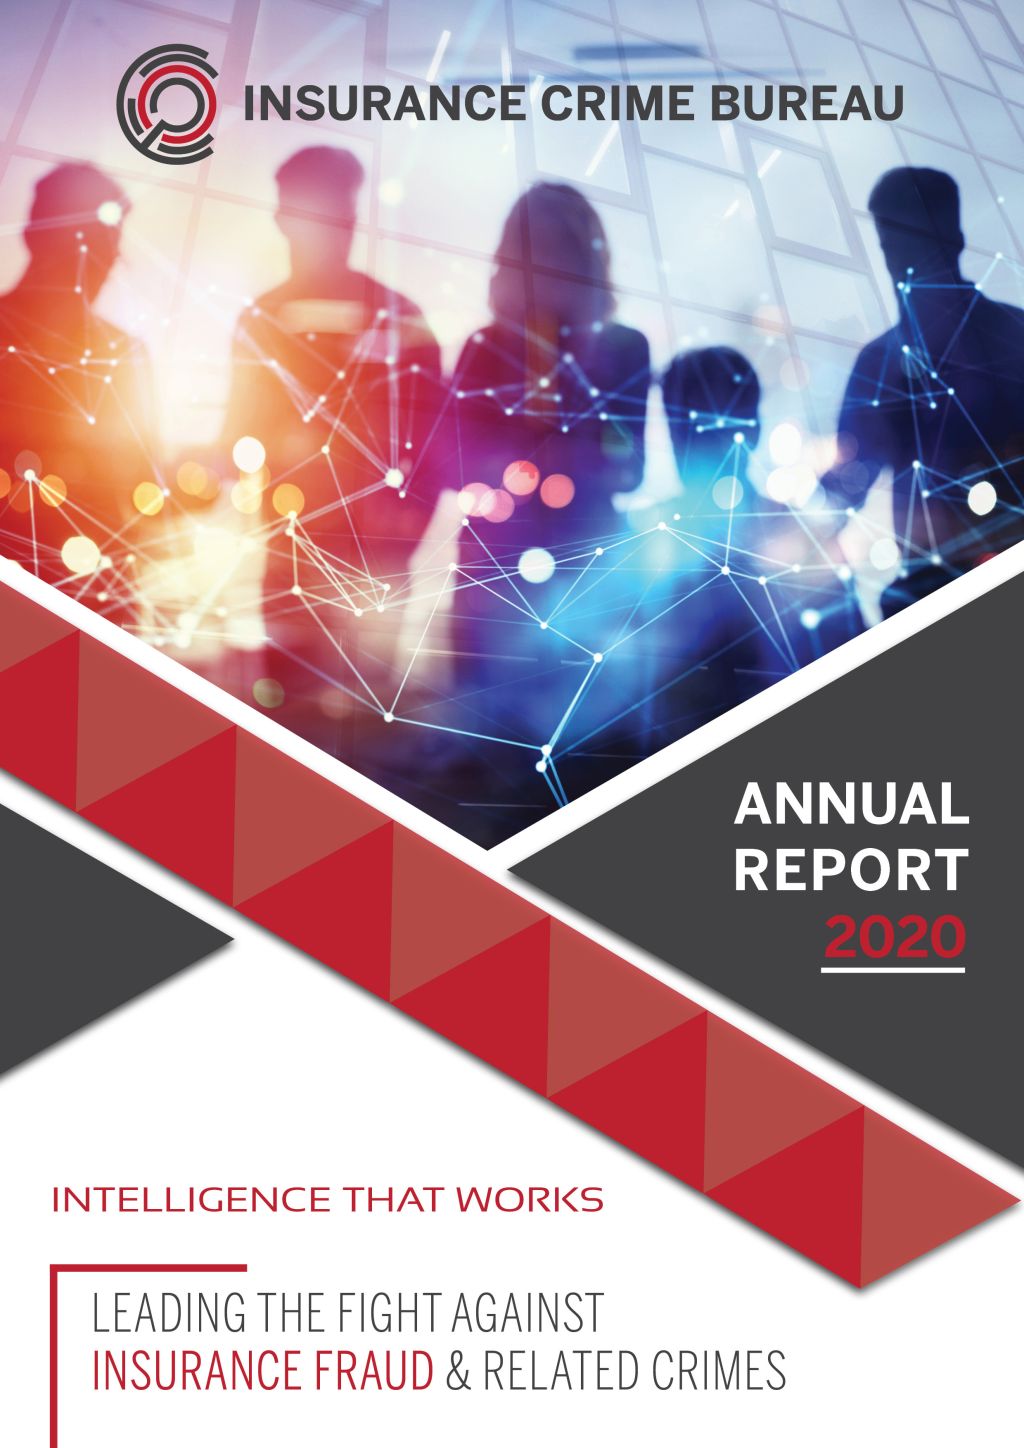 Download Insurance Crime Bureau 2020 Annual Report - The Insurance Crime Bureau